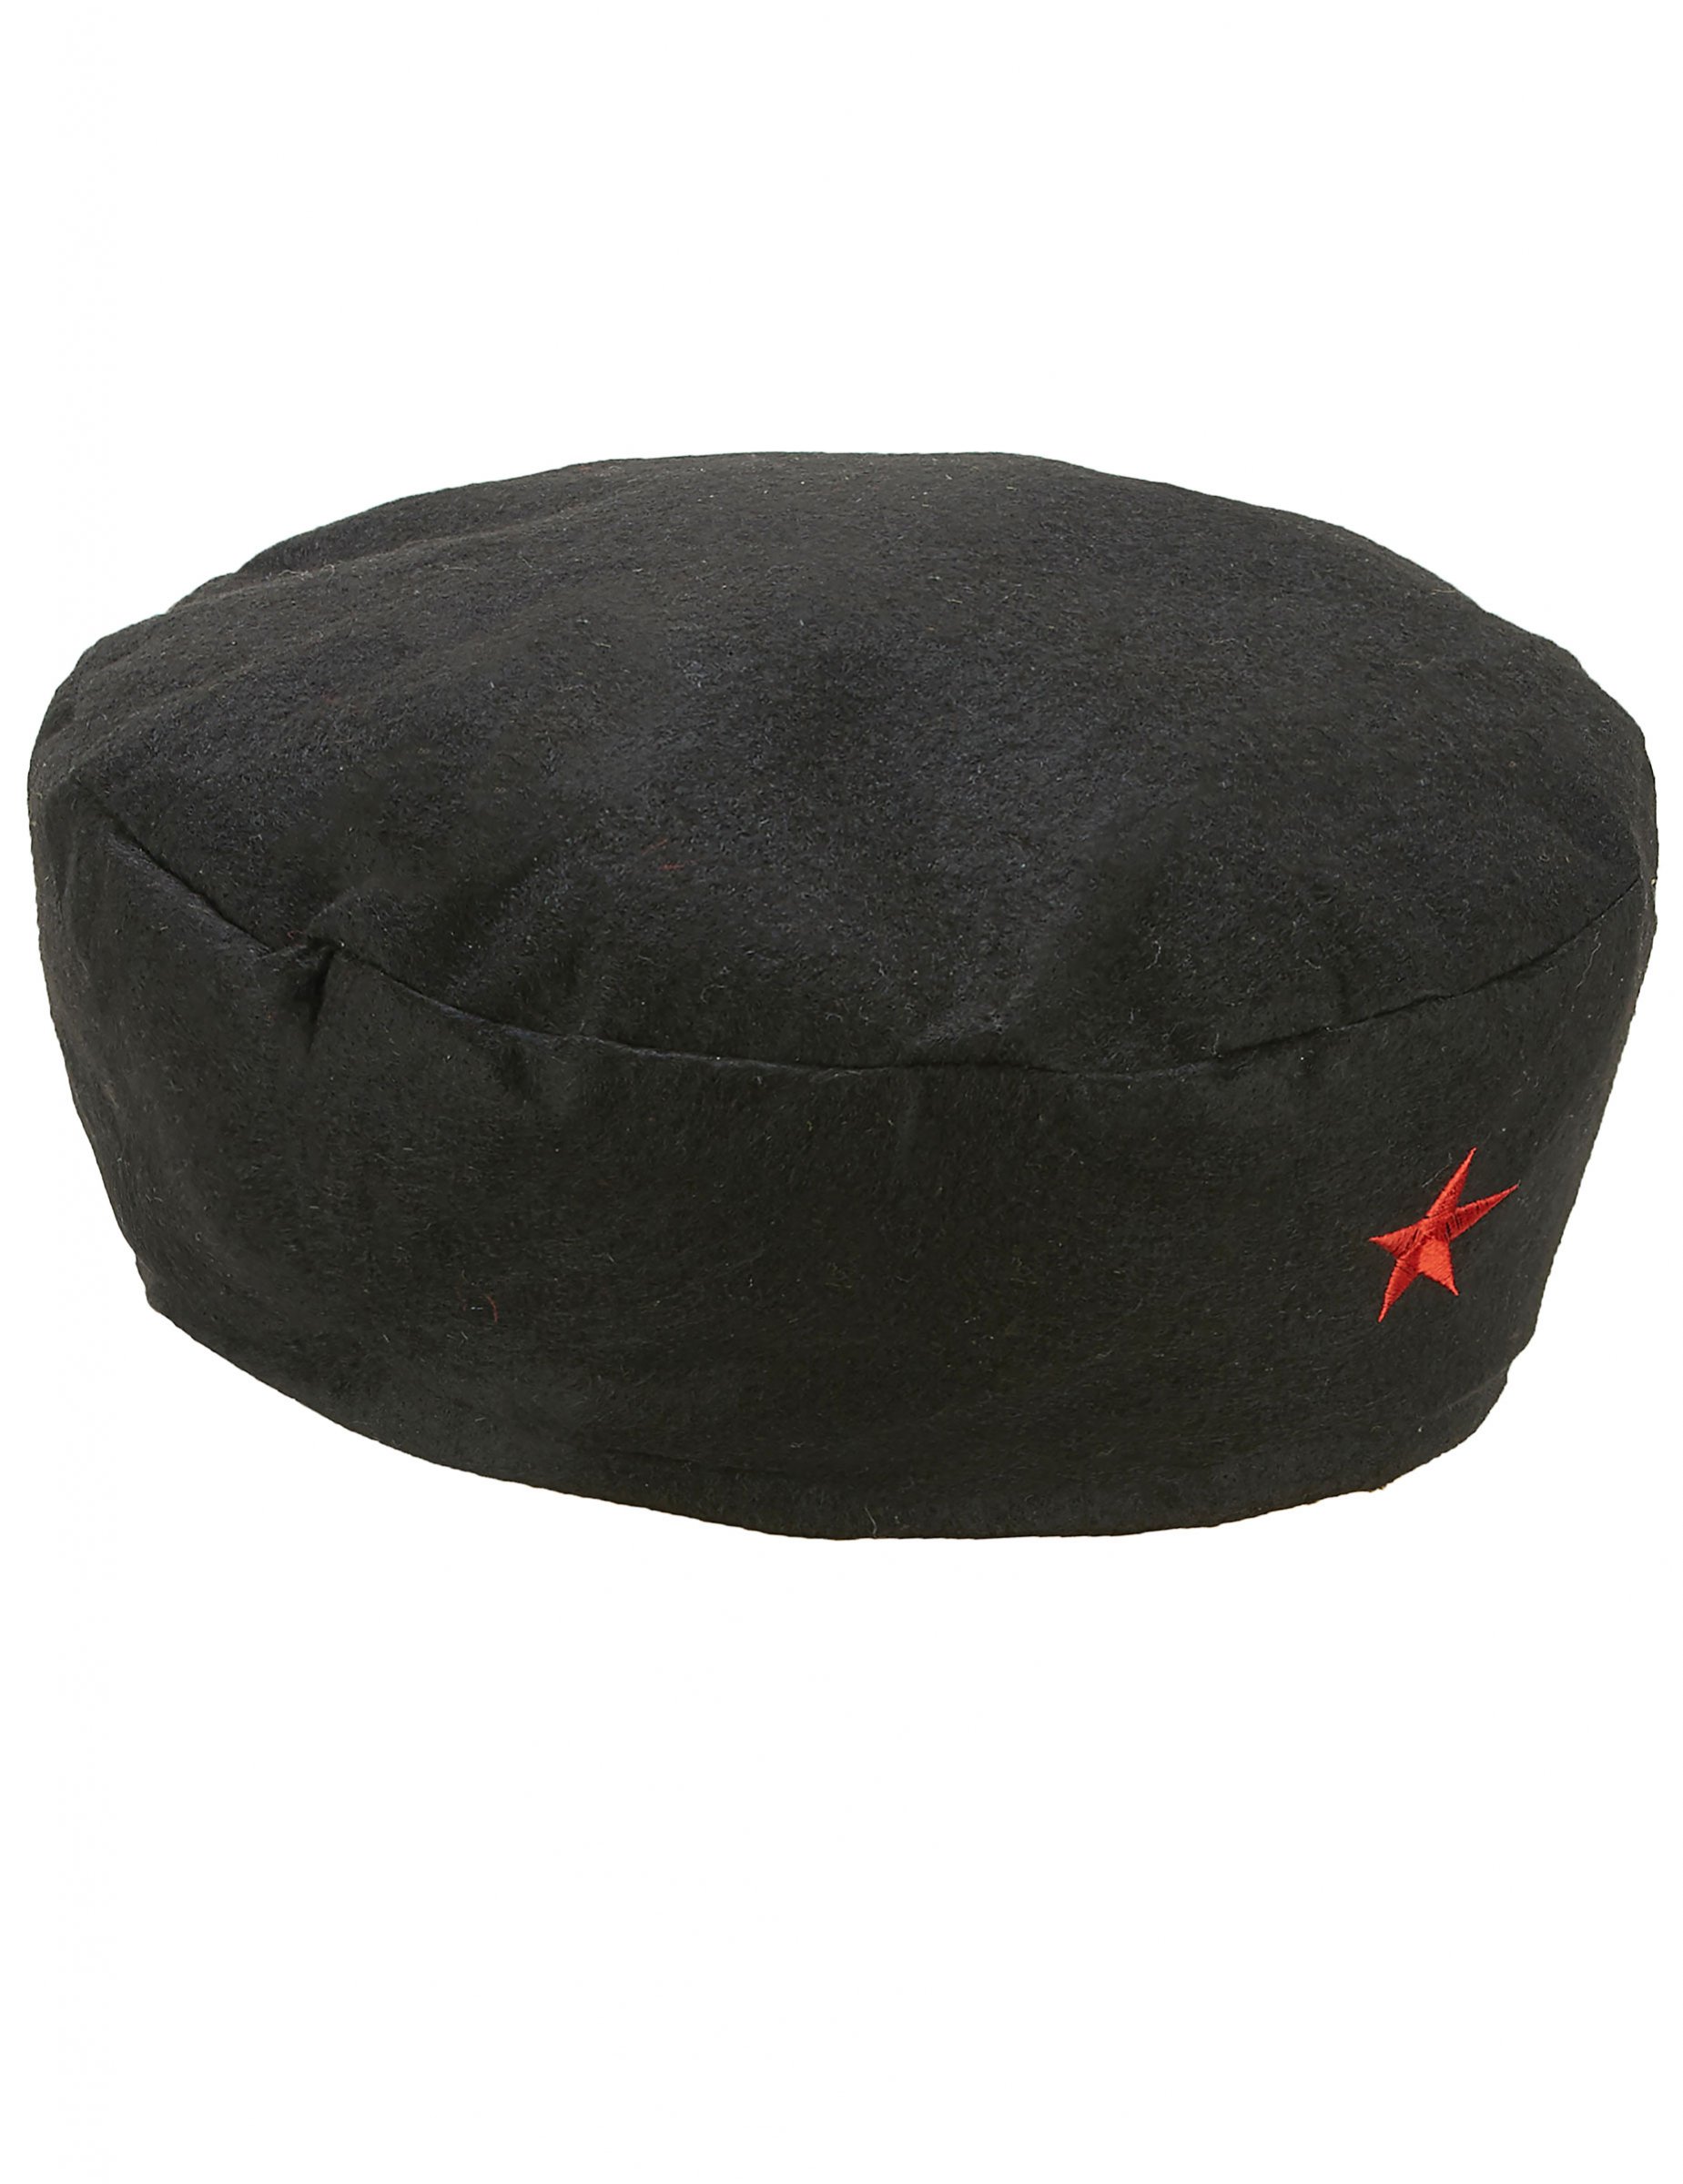 Revolutionär Barett-Mütze schwarz-rot von KARNEVAL-MEGASTORE